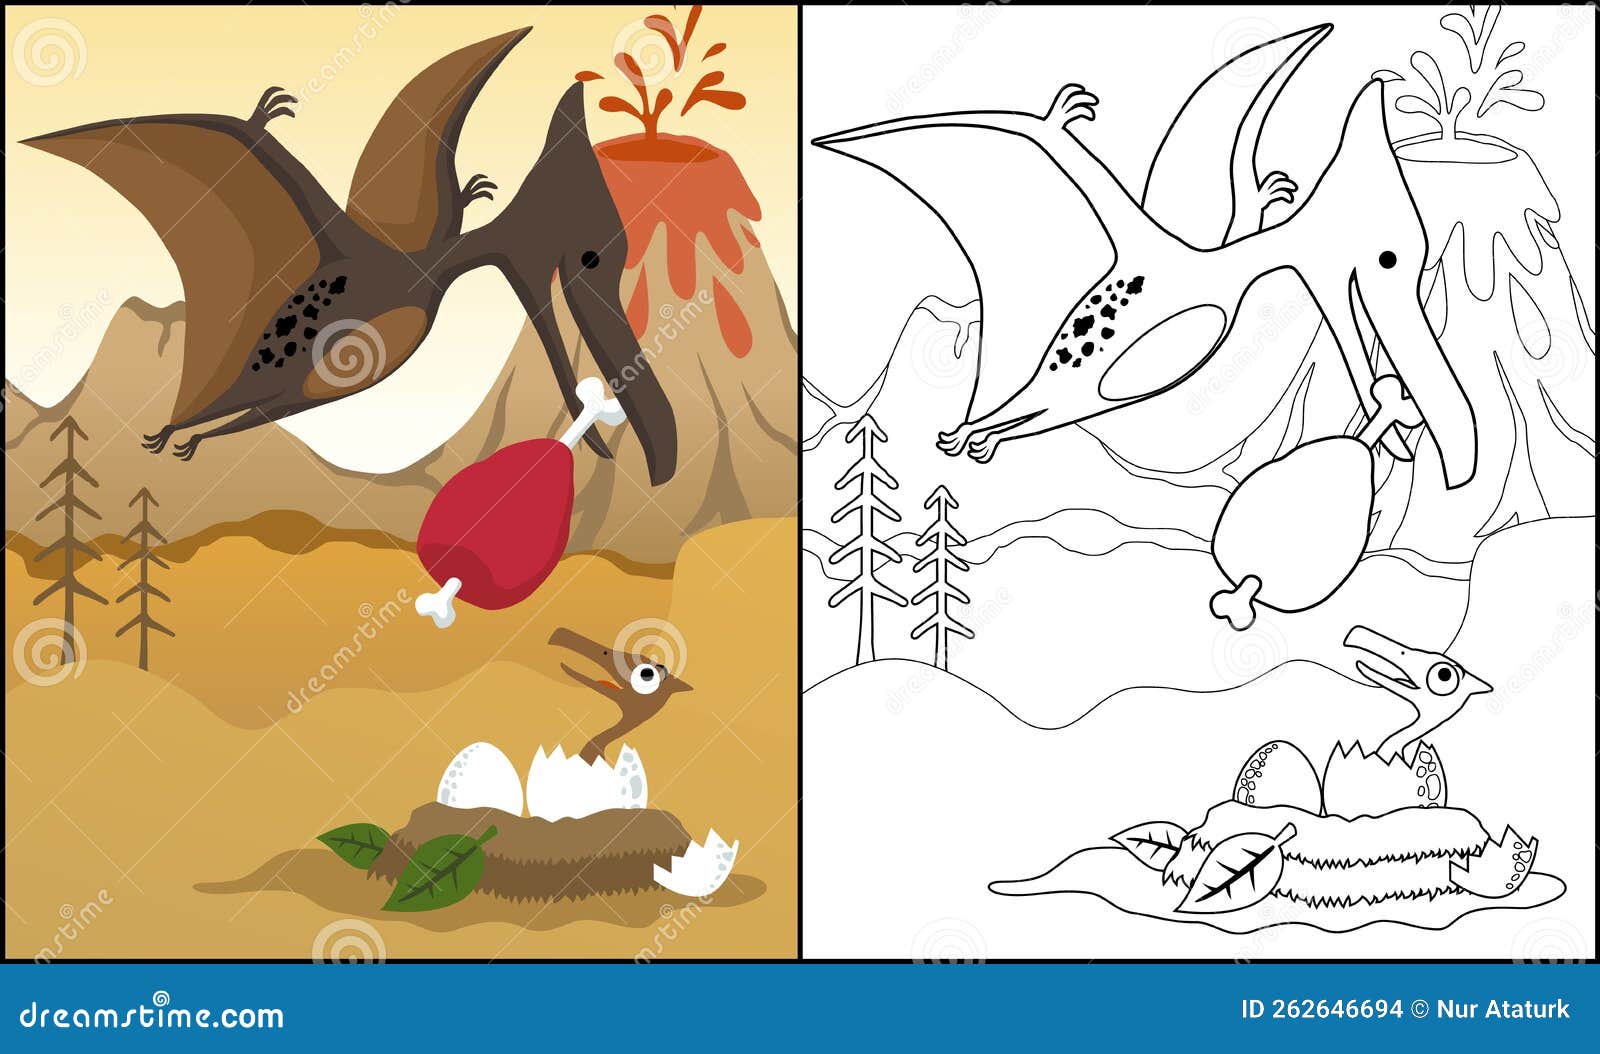 Egg and Pterodactyl 3d Rendering Stock Illustration - Illustration of  nature, danger: 102026224